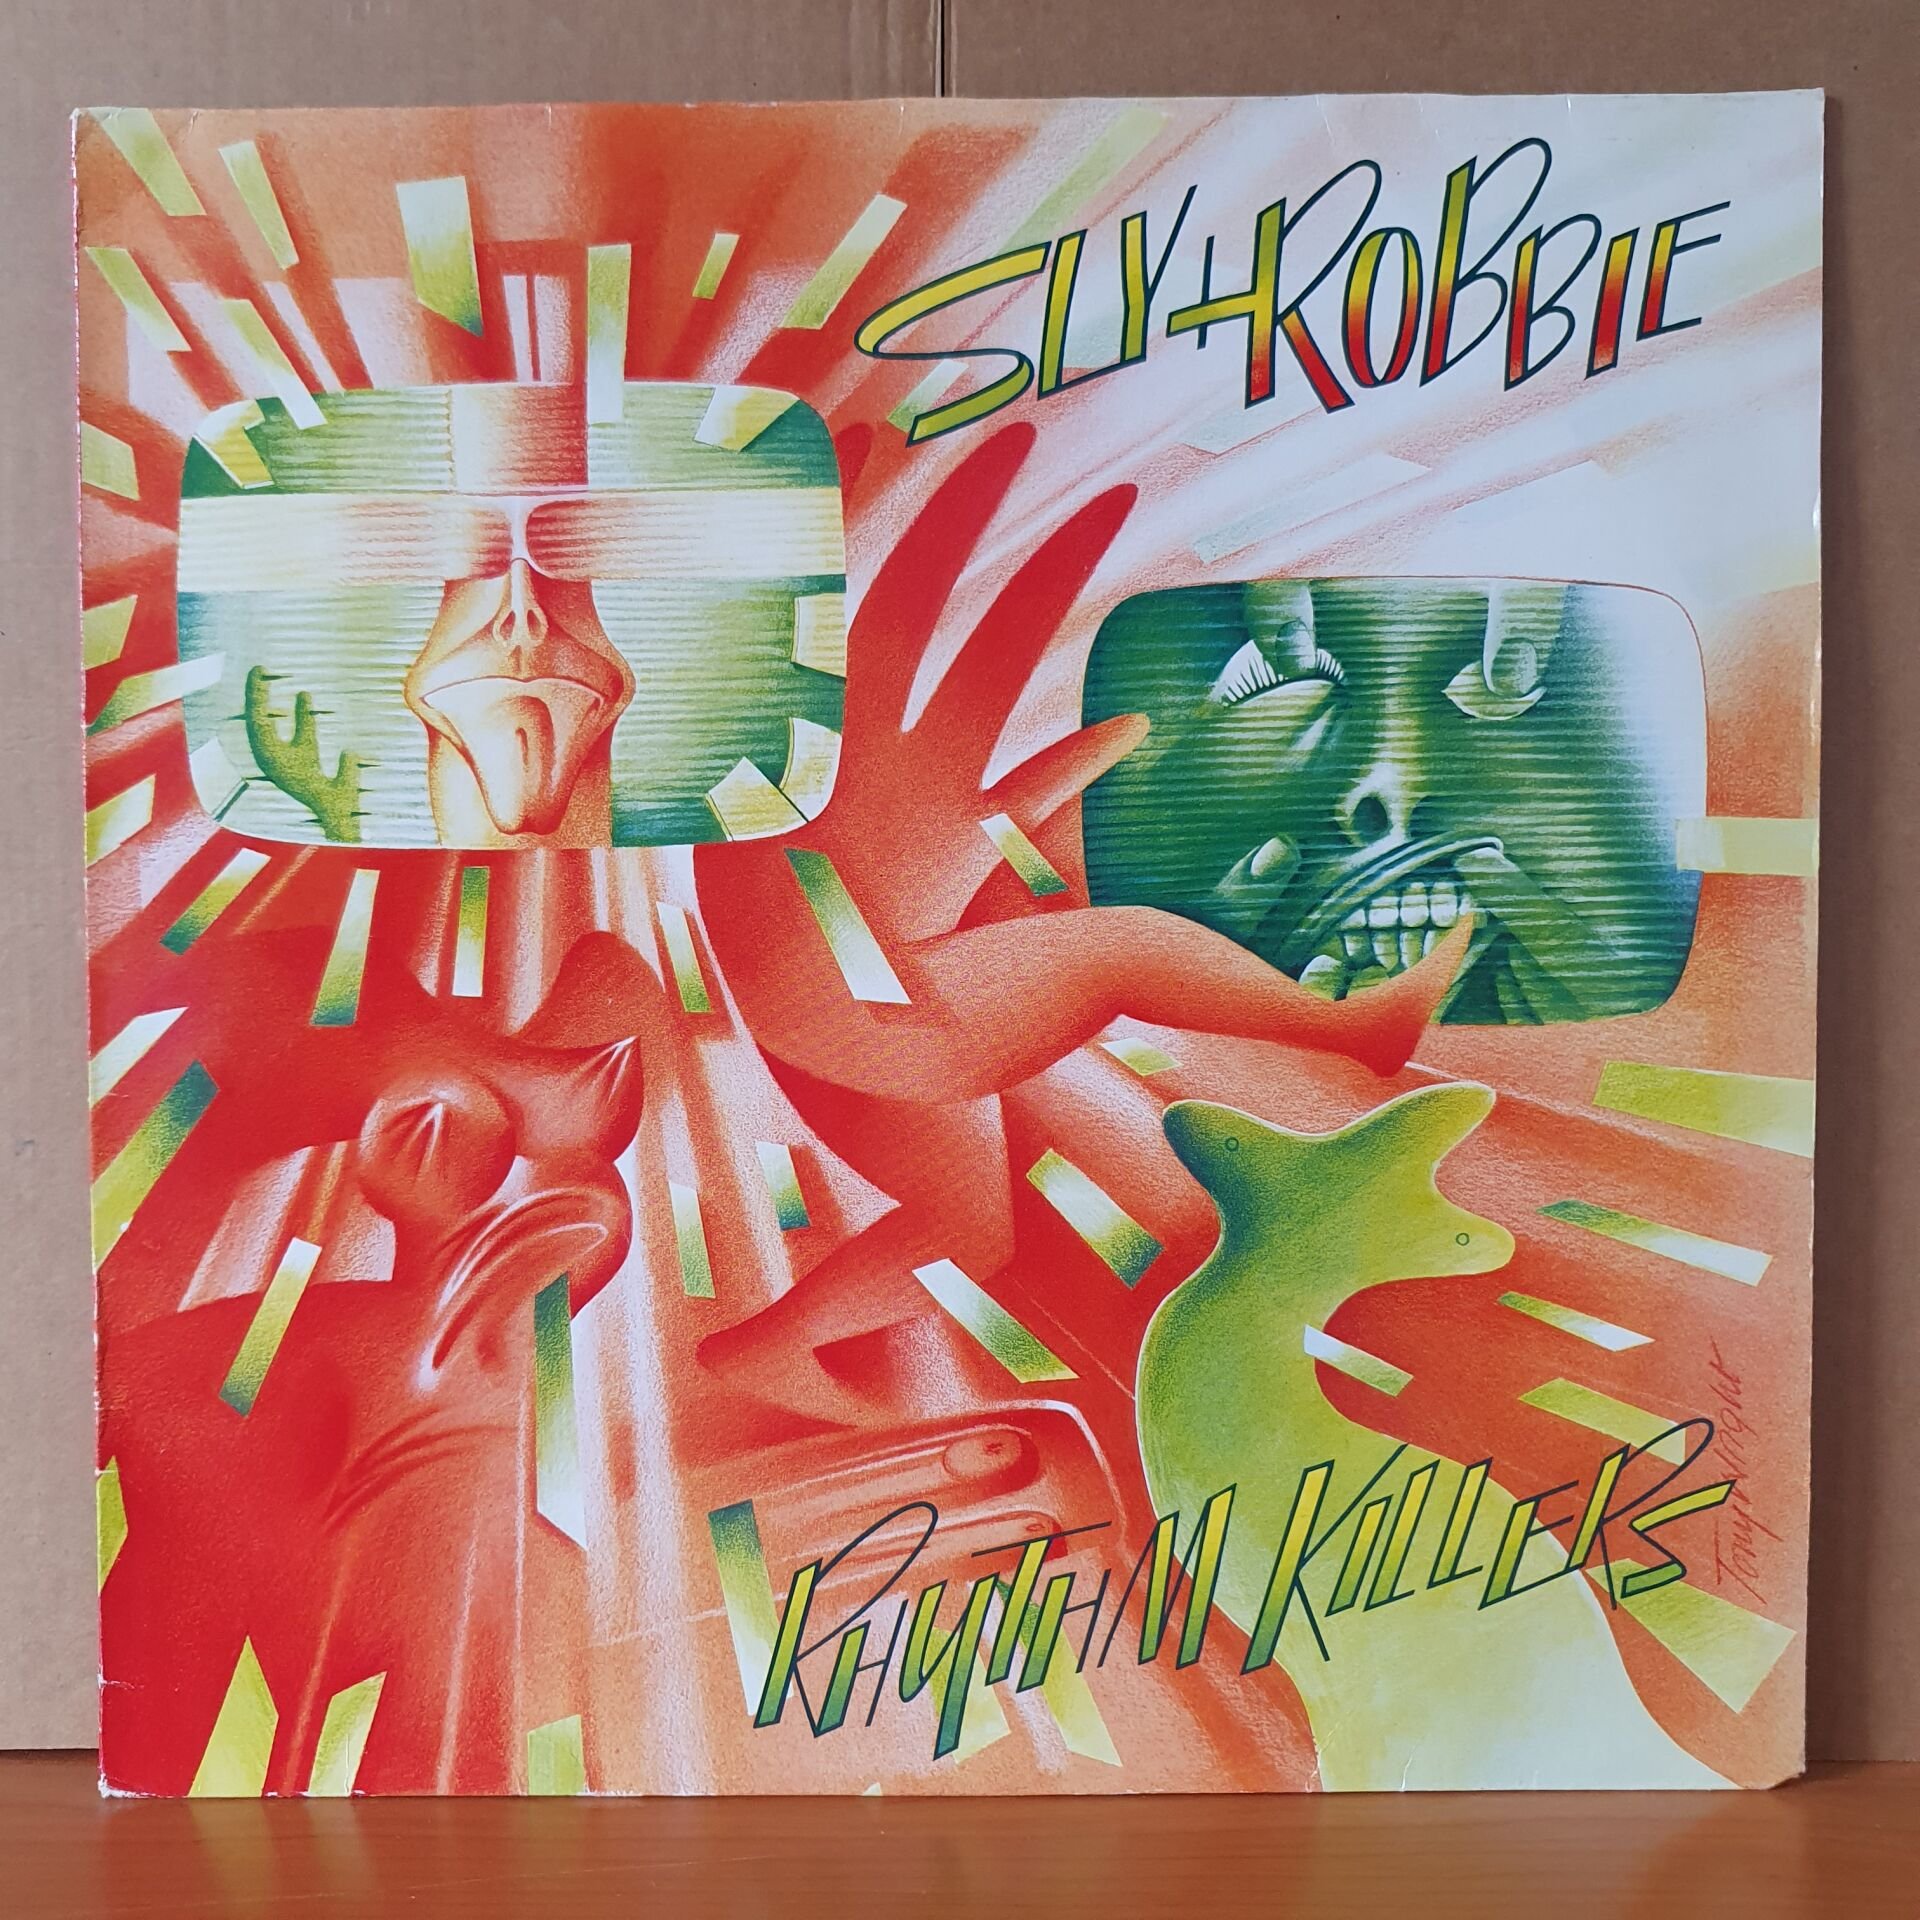 SLY & ROBBIE - RHYTHM KILLERS (1987) - LP 2.EL PLAK